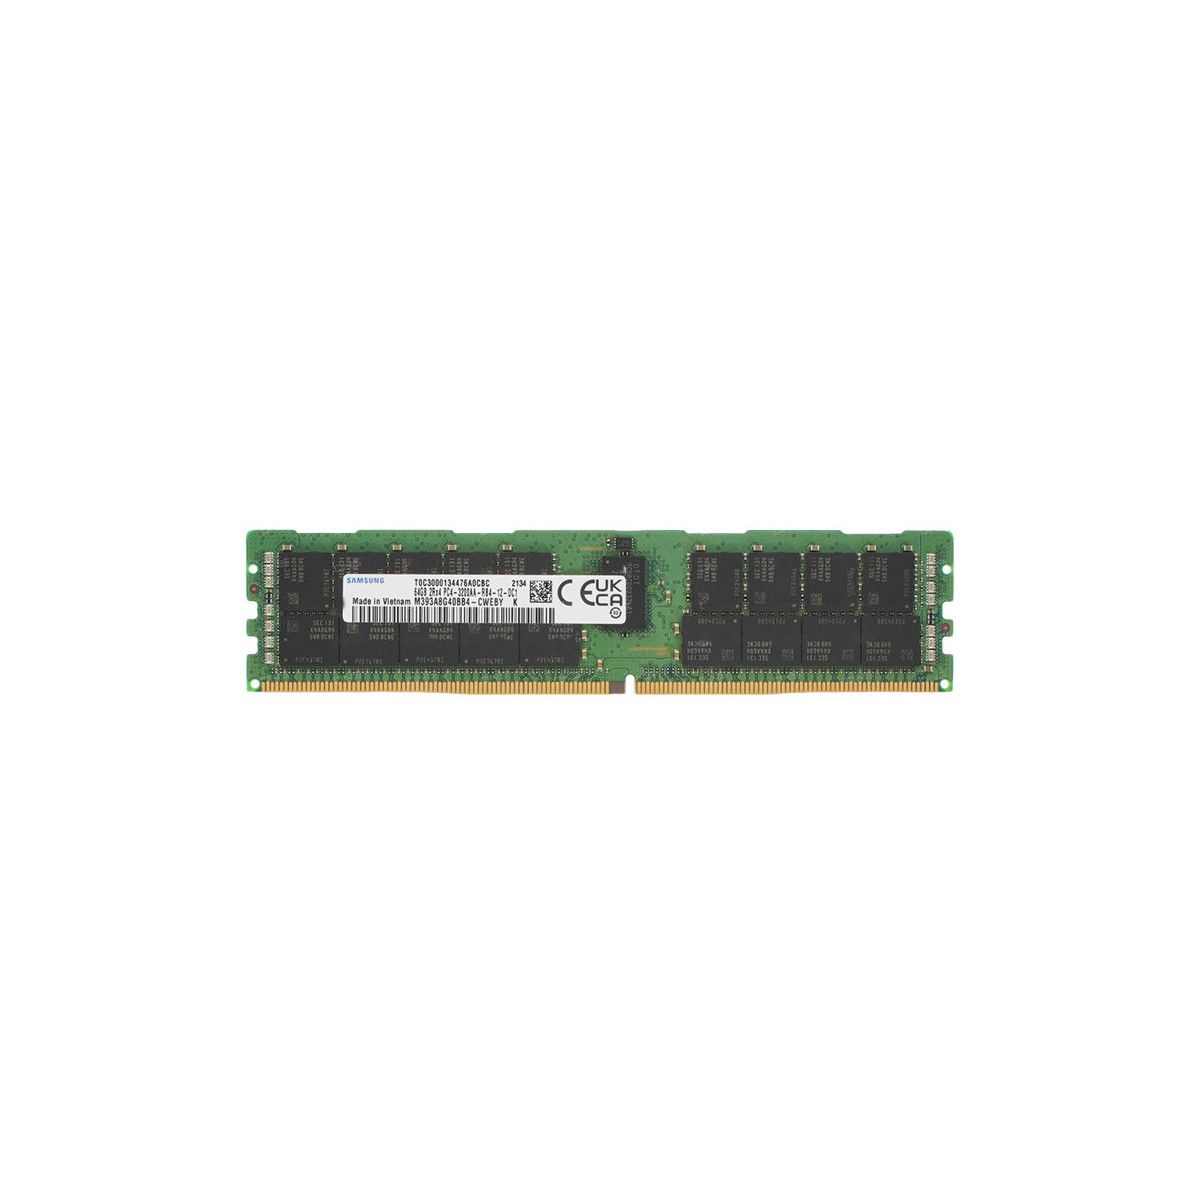 P25205‐B21-MS - Memstar 1x 64GB DDR4-3200 RDIMM PC4-25600R - Mem-star Compatible OEM Mémoire 1 - Memstar 